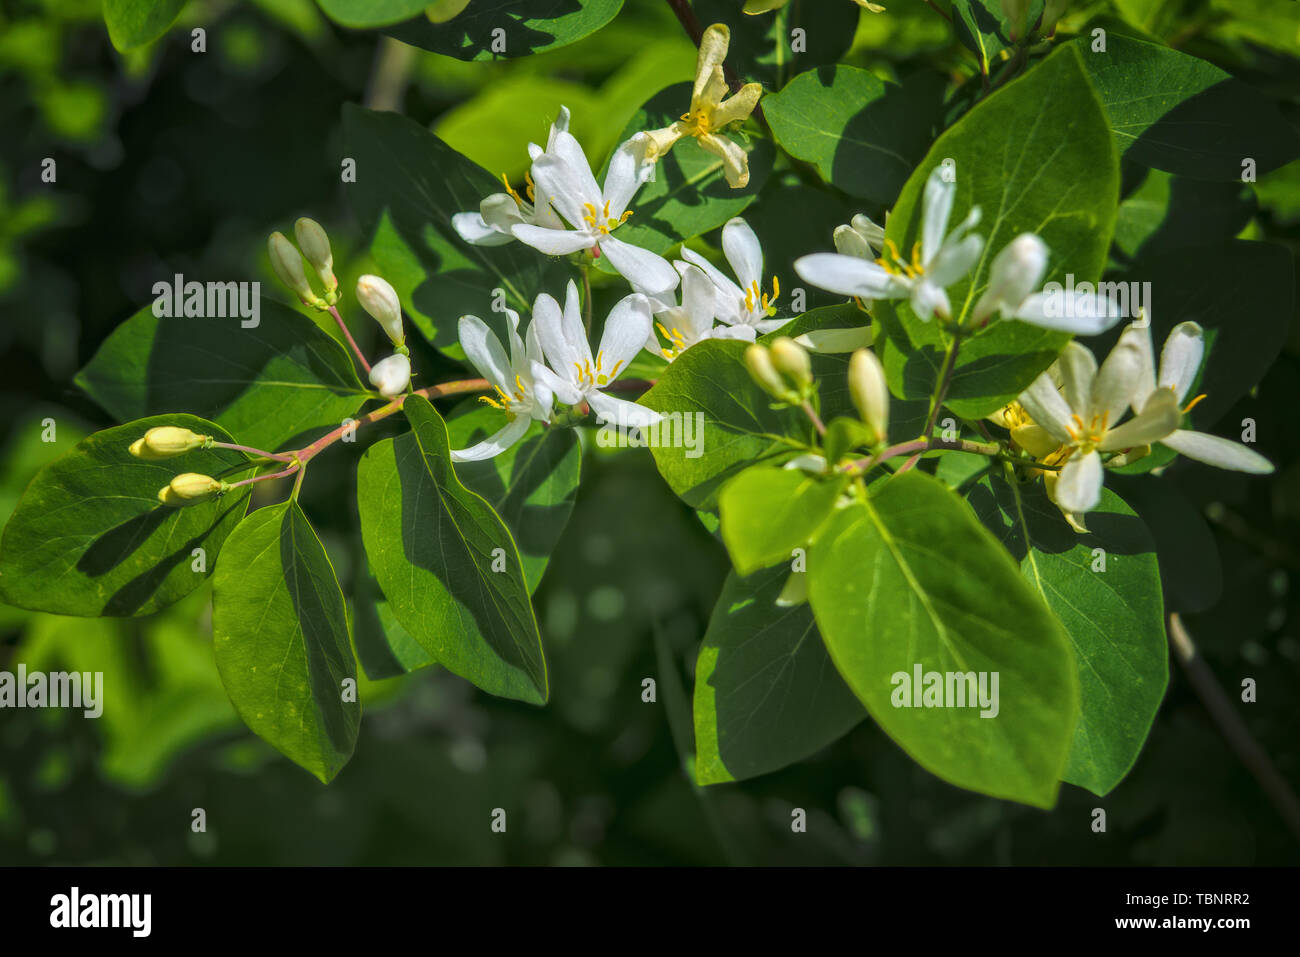 Frangula alnus flowering bush, blooming white flower close up detail. Stock Photo